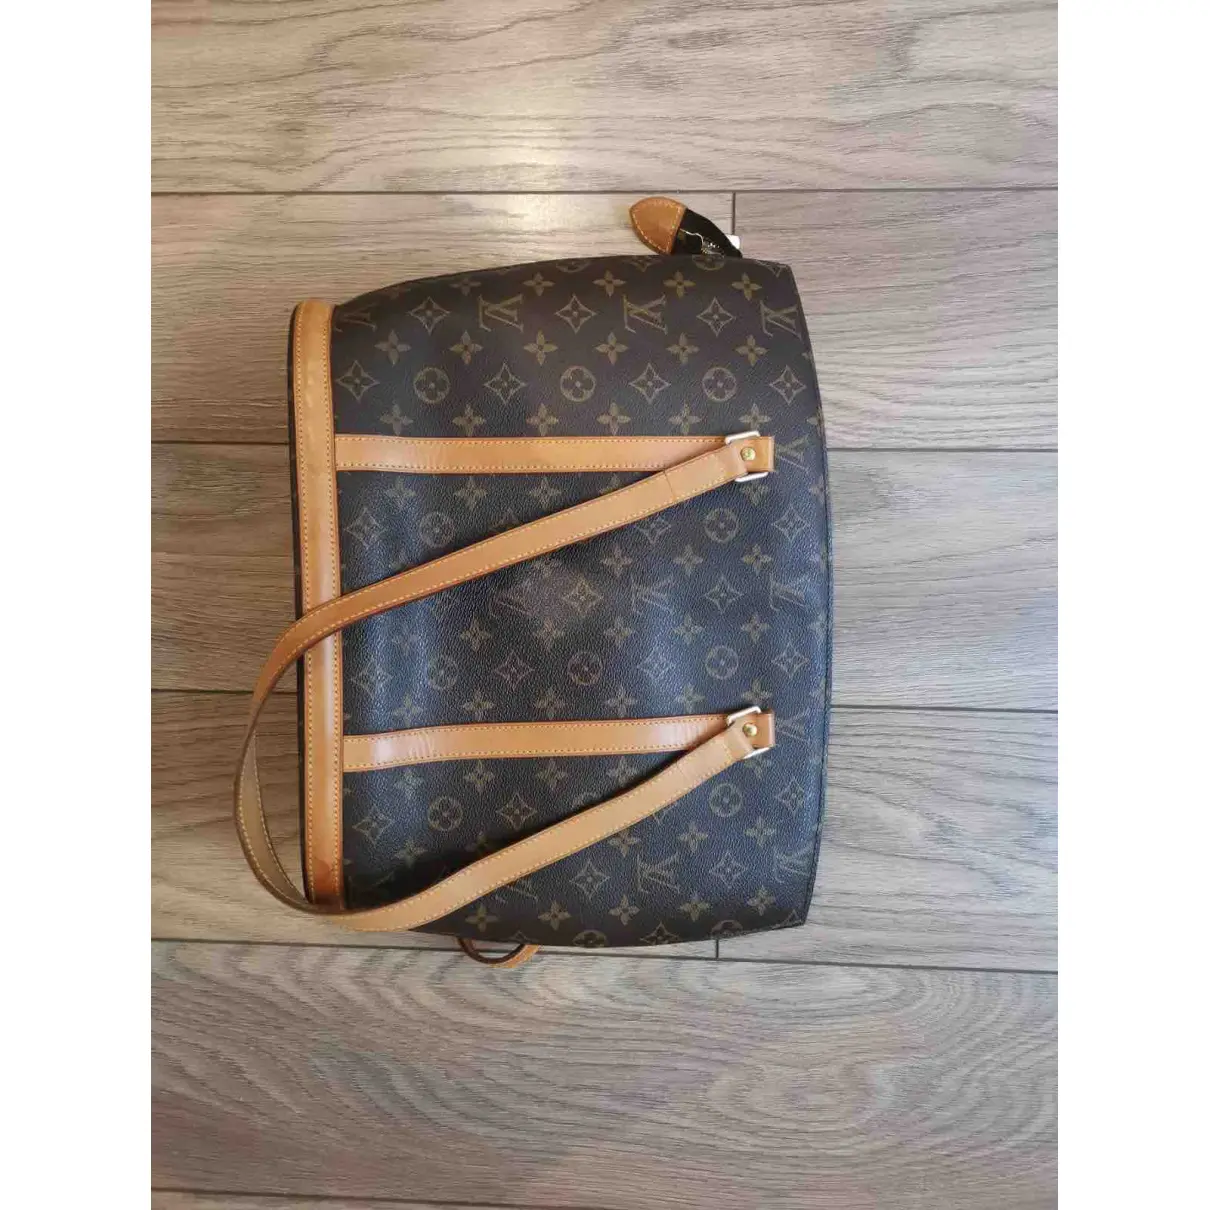 Buy Louis Vuitton Neverfull leather handbag online